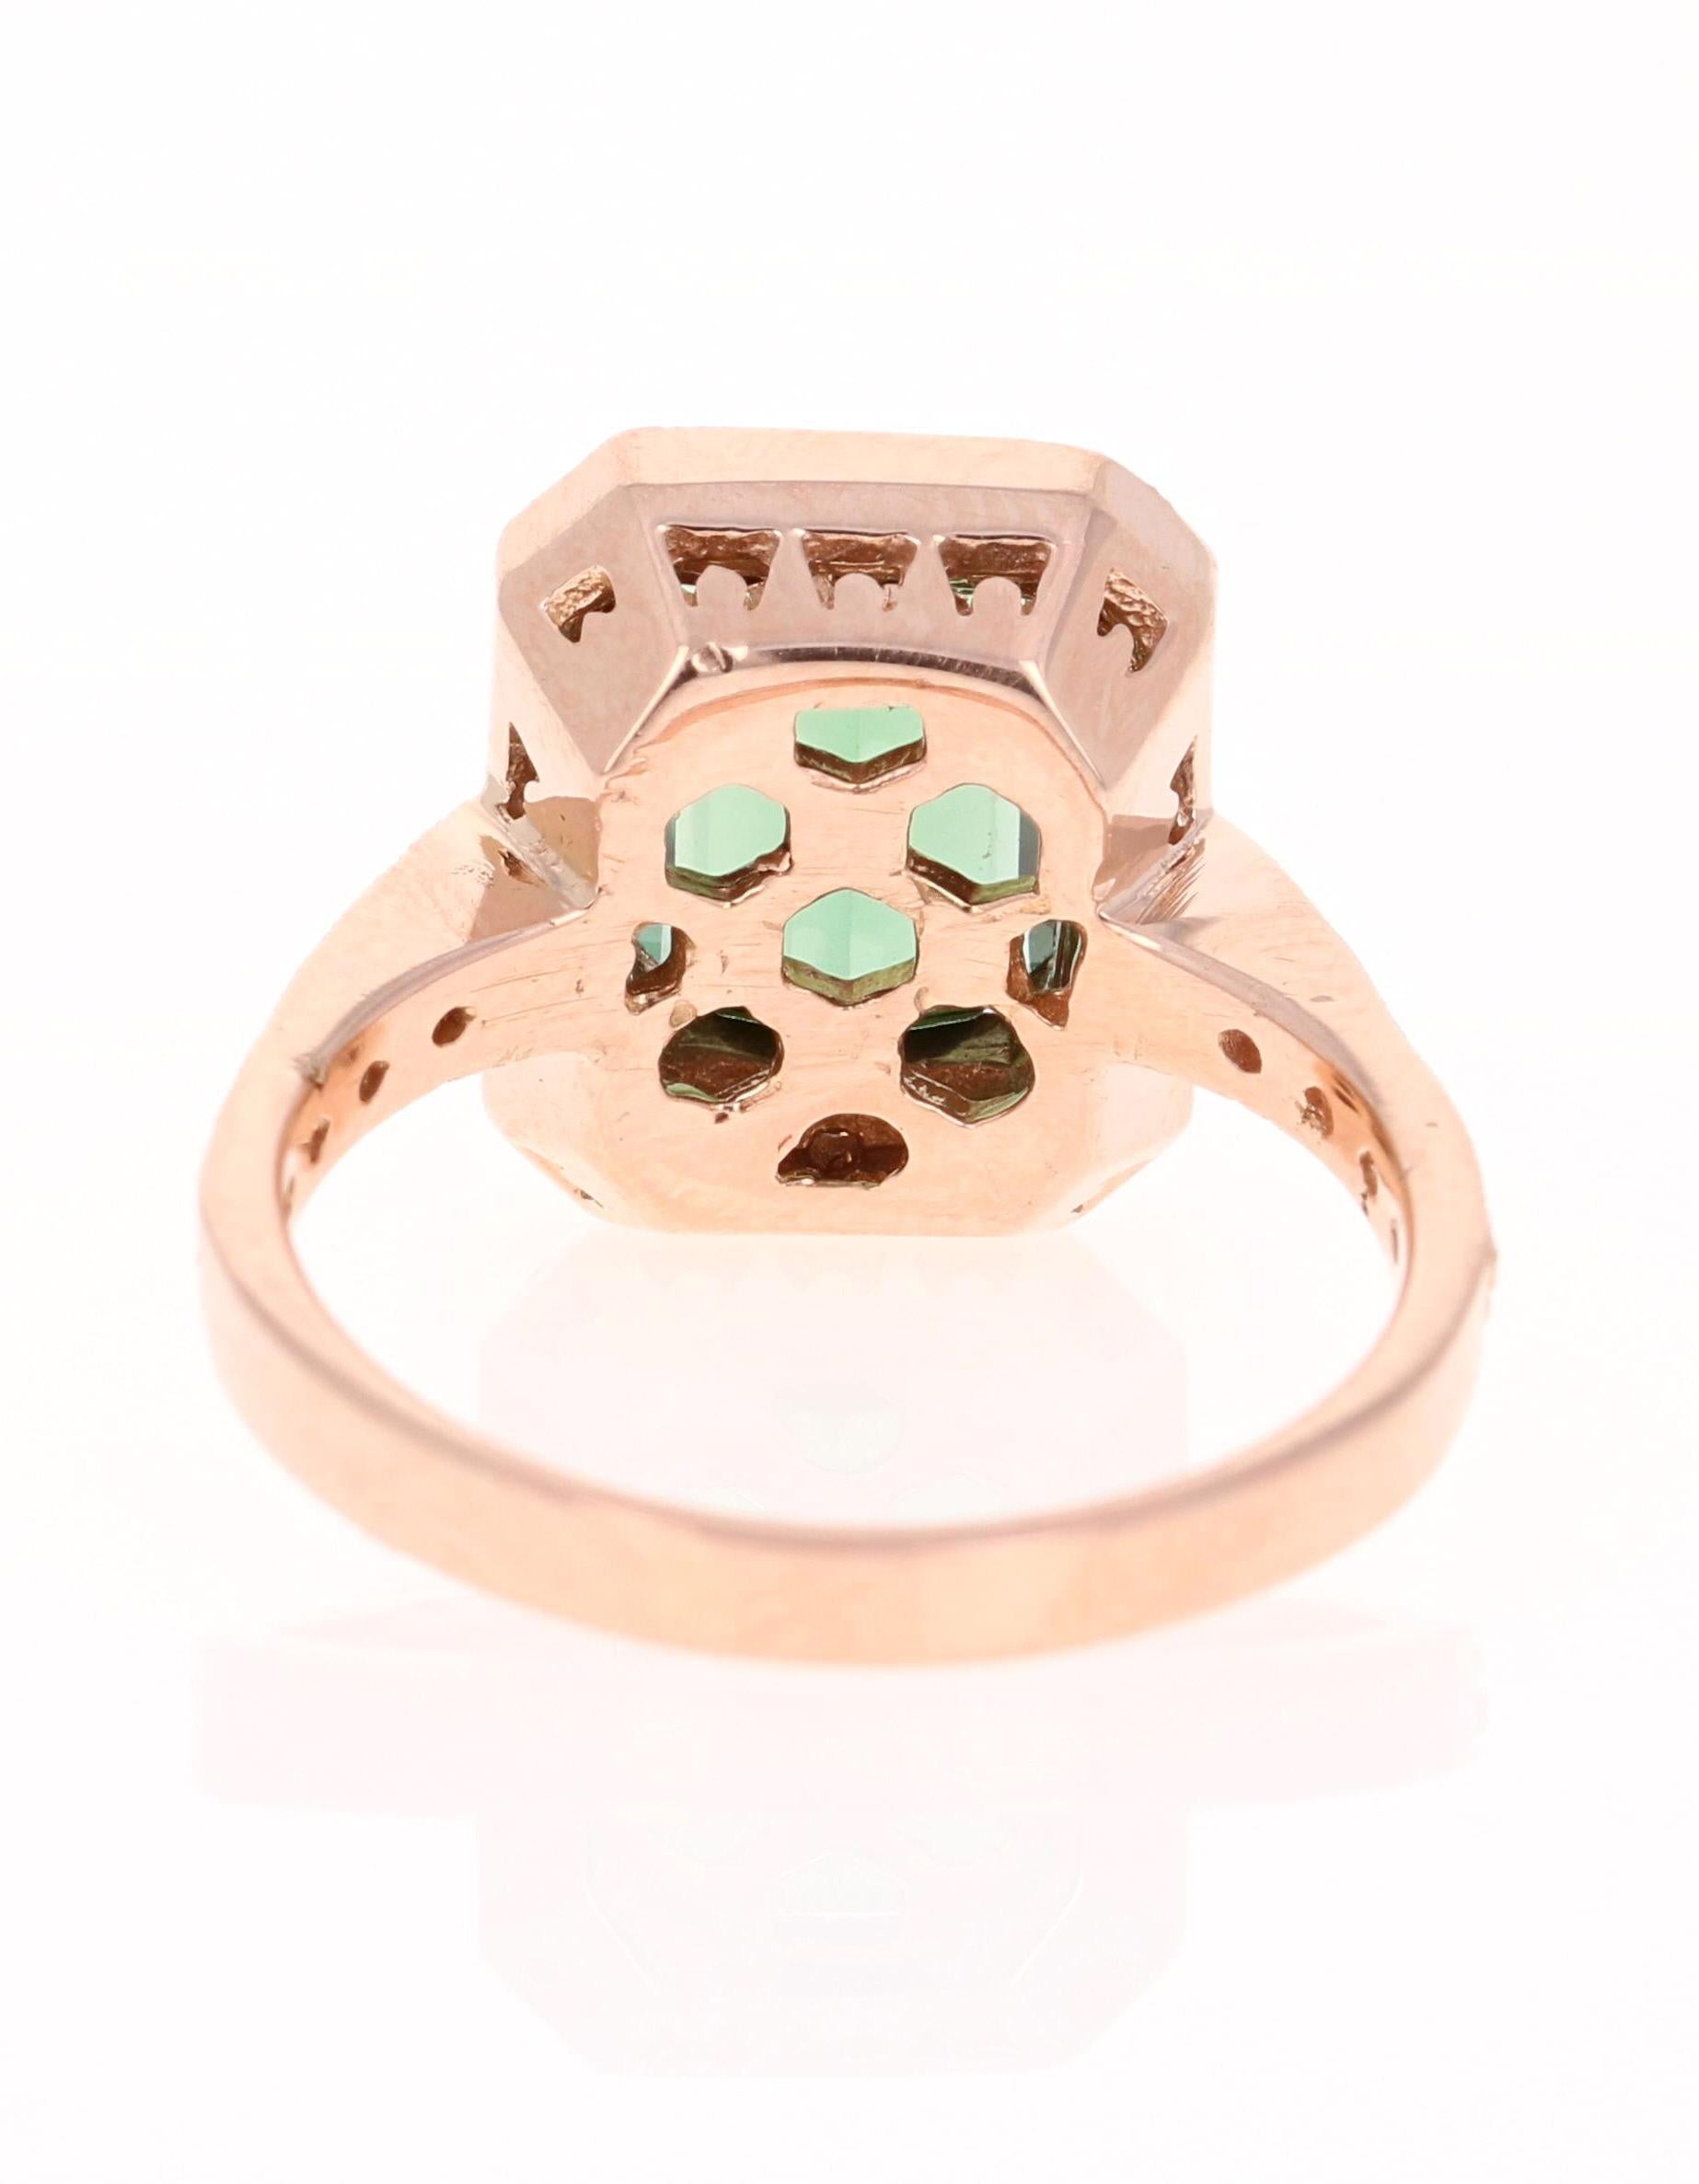 Emerald Cut 3.03 Carat Green Tourmaline Diamond 14 Karat Rose Gold Engagement Ring For Sale